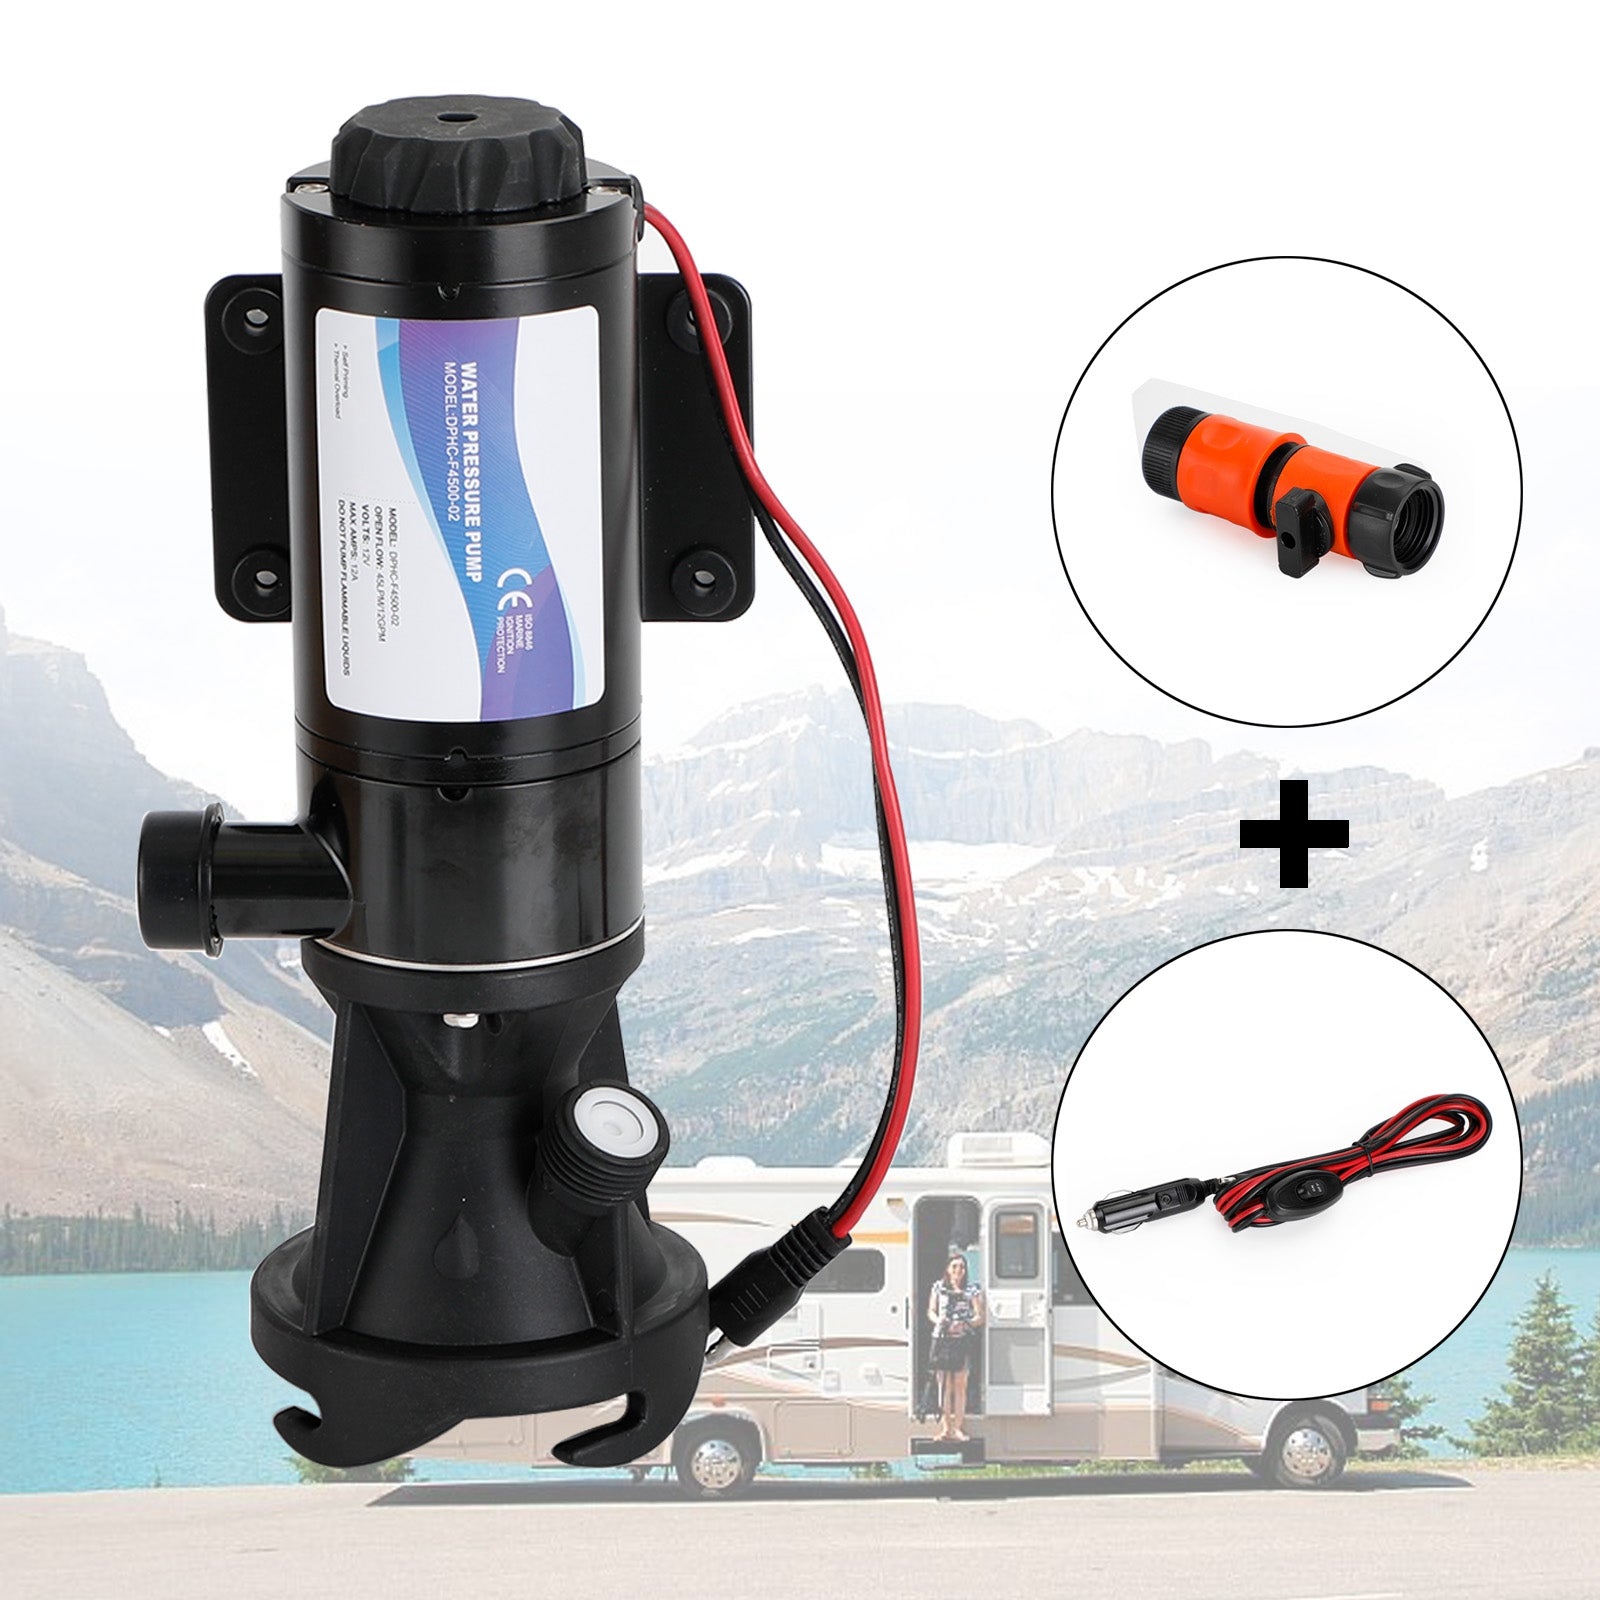 Portable 12V RV Macerator Pump for Waste Water Processing - Sewage Chopper Pump - 0